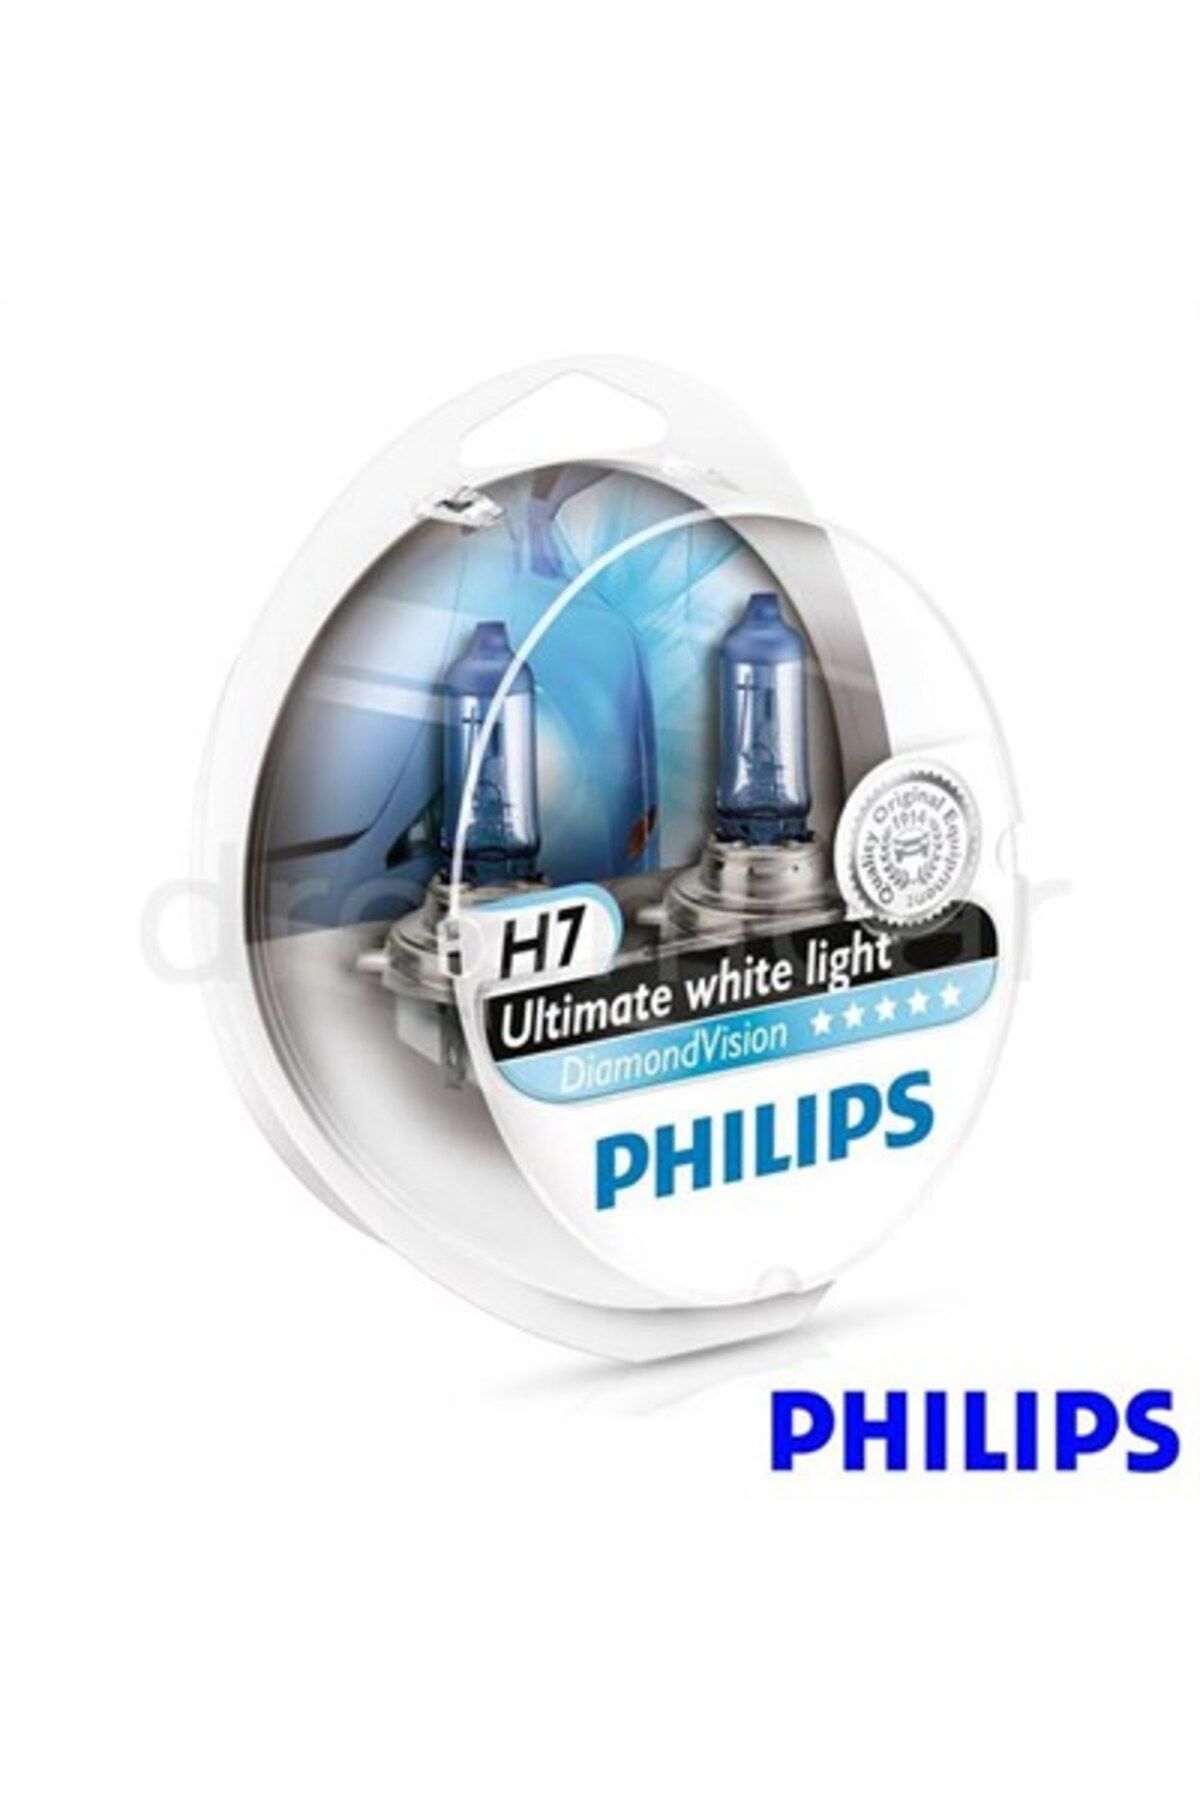 Philips Diamond Vision H7 Beyaz Ampul 12972dvs2 - 2'li Ampul